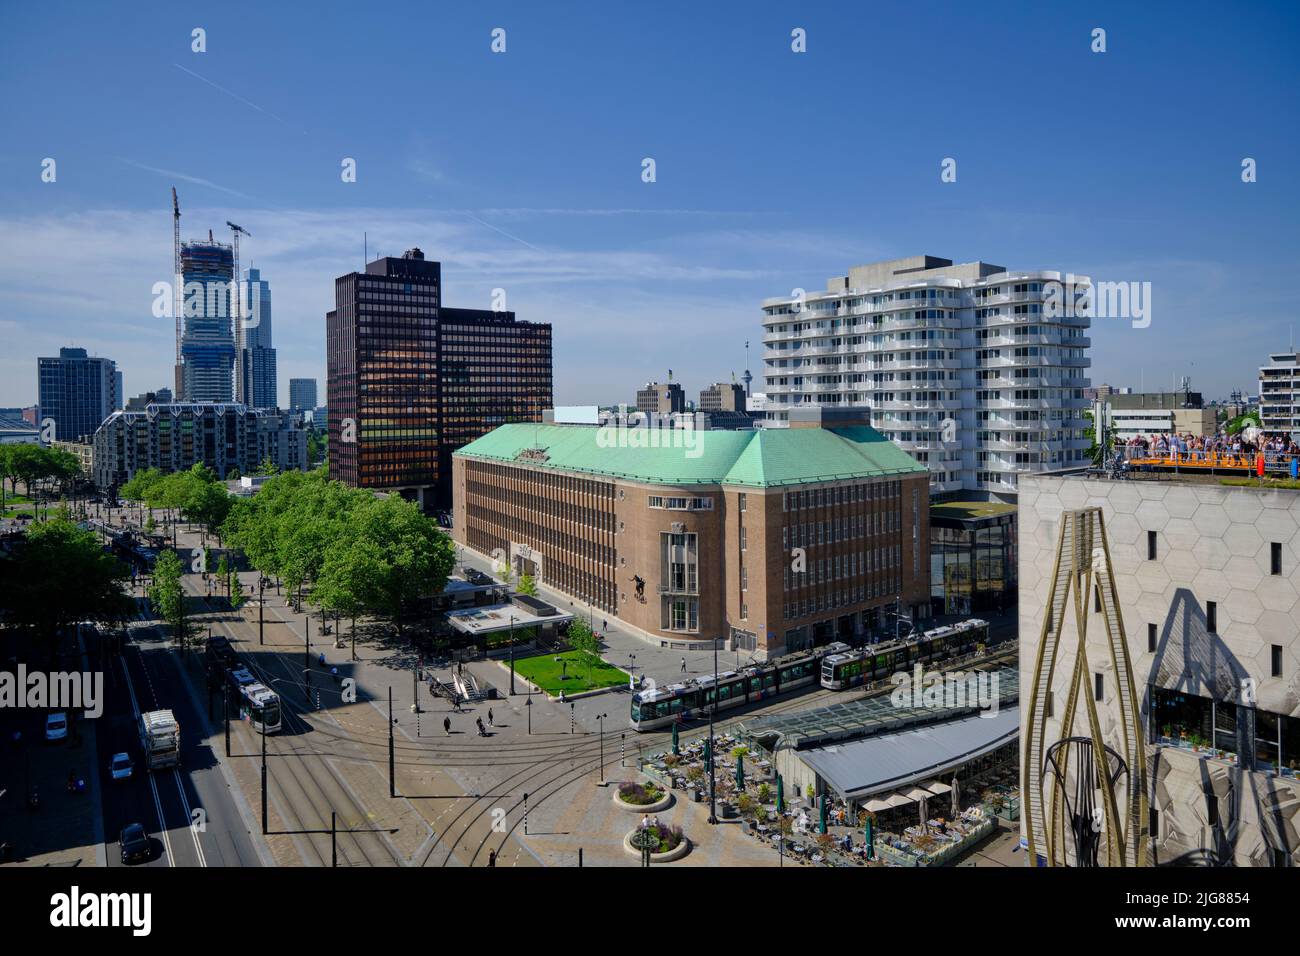 Rotterdam, Niederlande - Luftaufnahme entlang des zentralen Coolsingel Boulevards Stockfoto